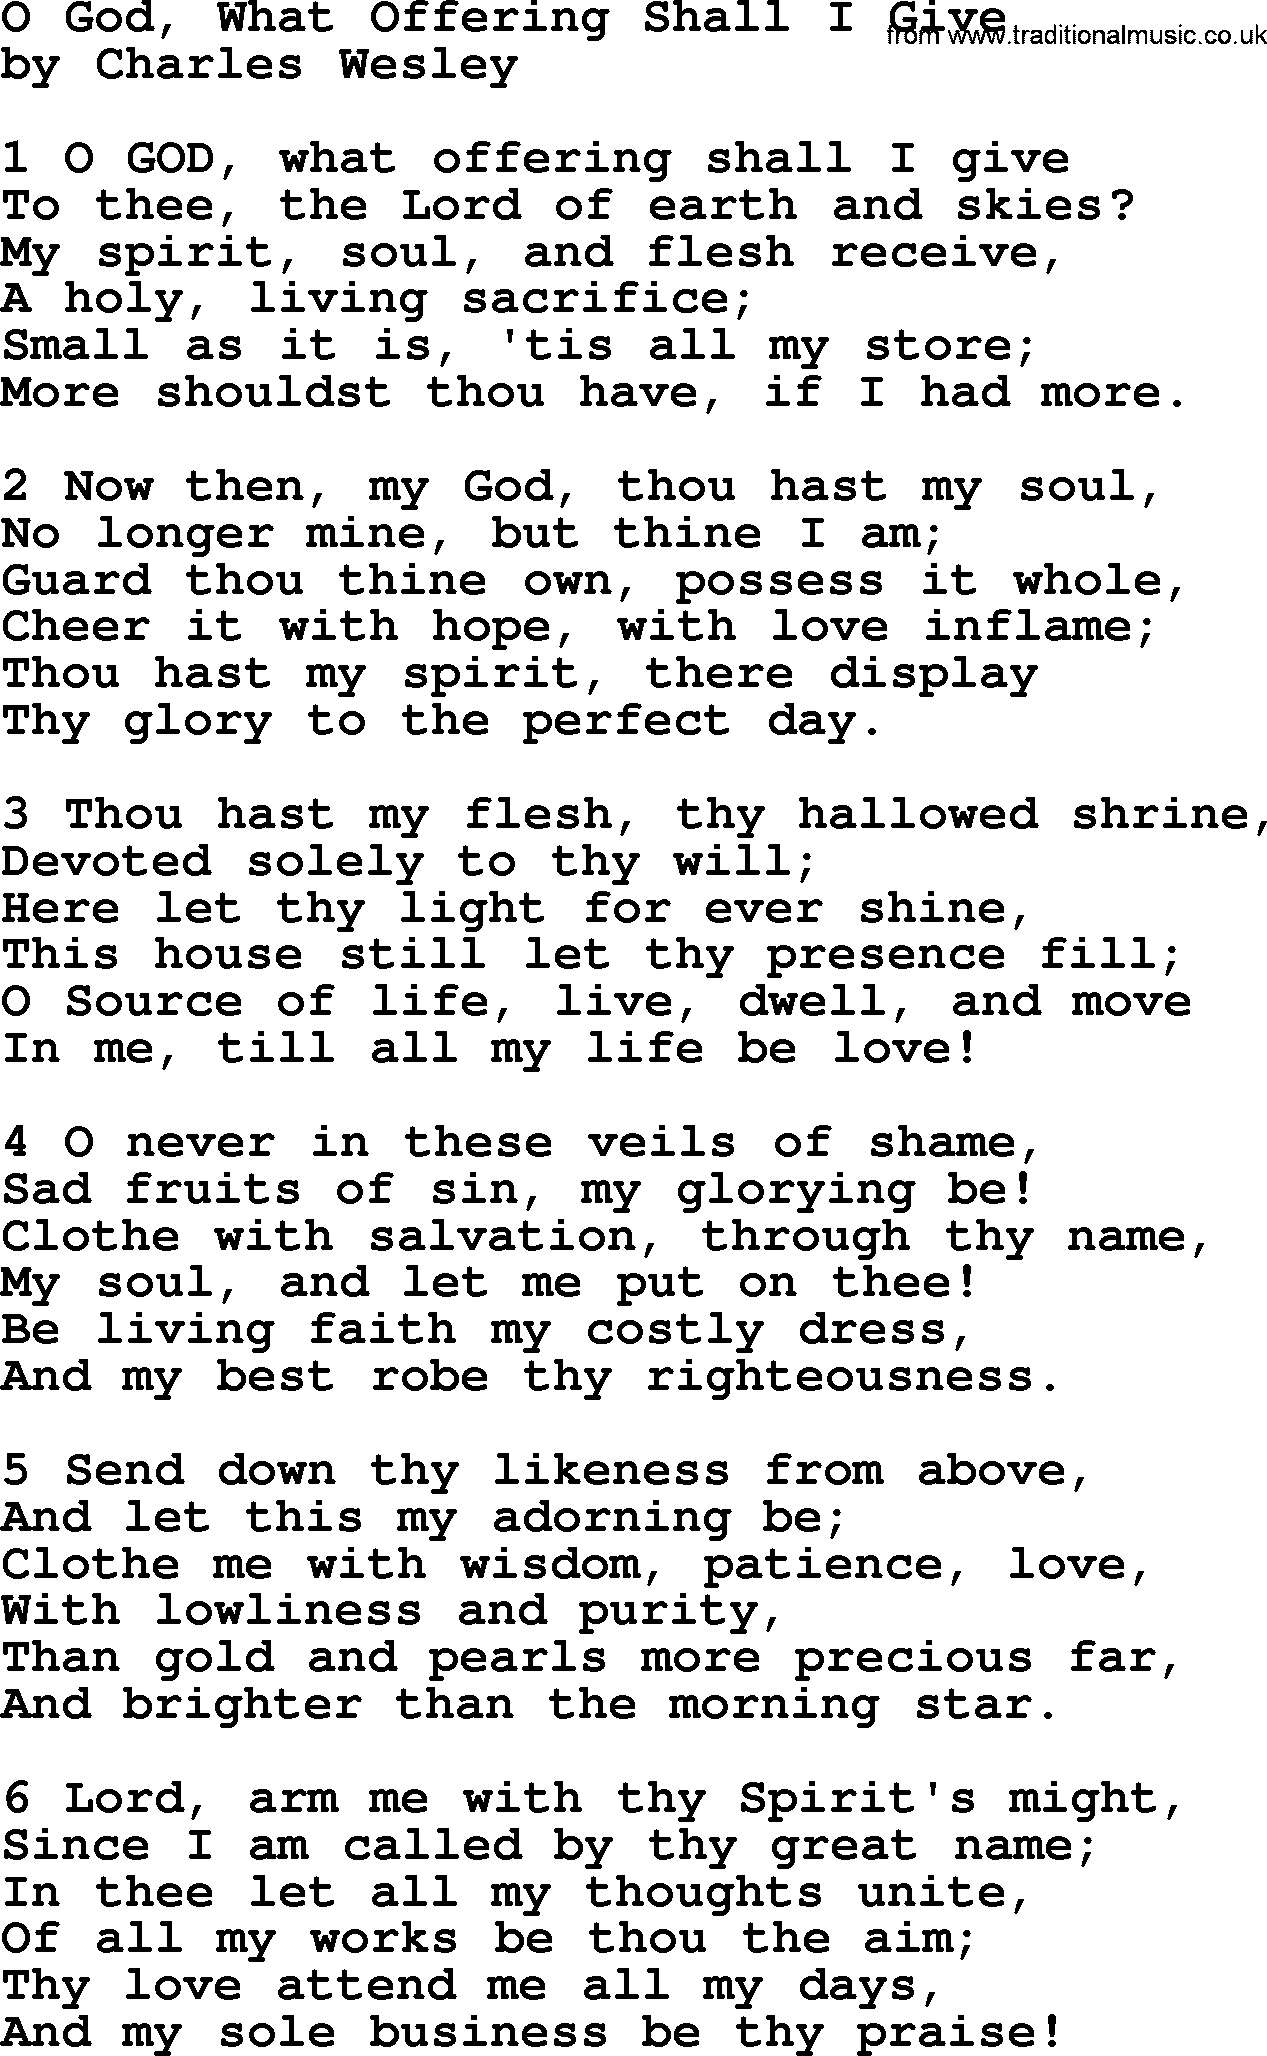 Charles Wesley hymn: O God, What Offering Shall I Give, lyrics